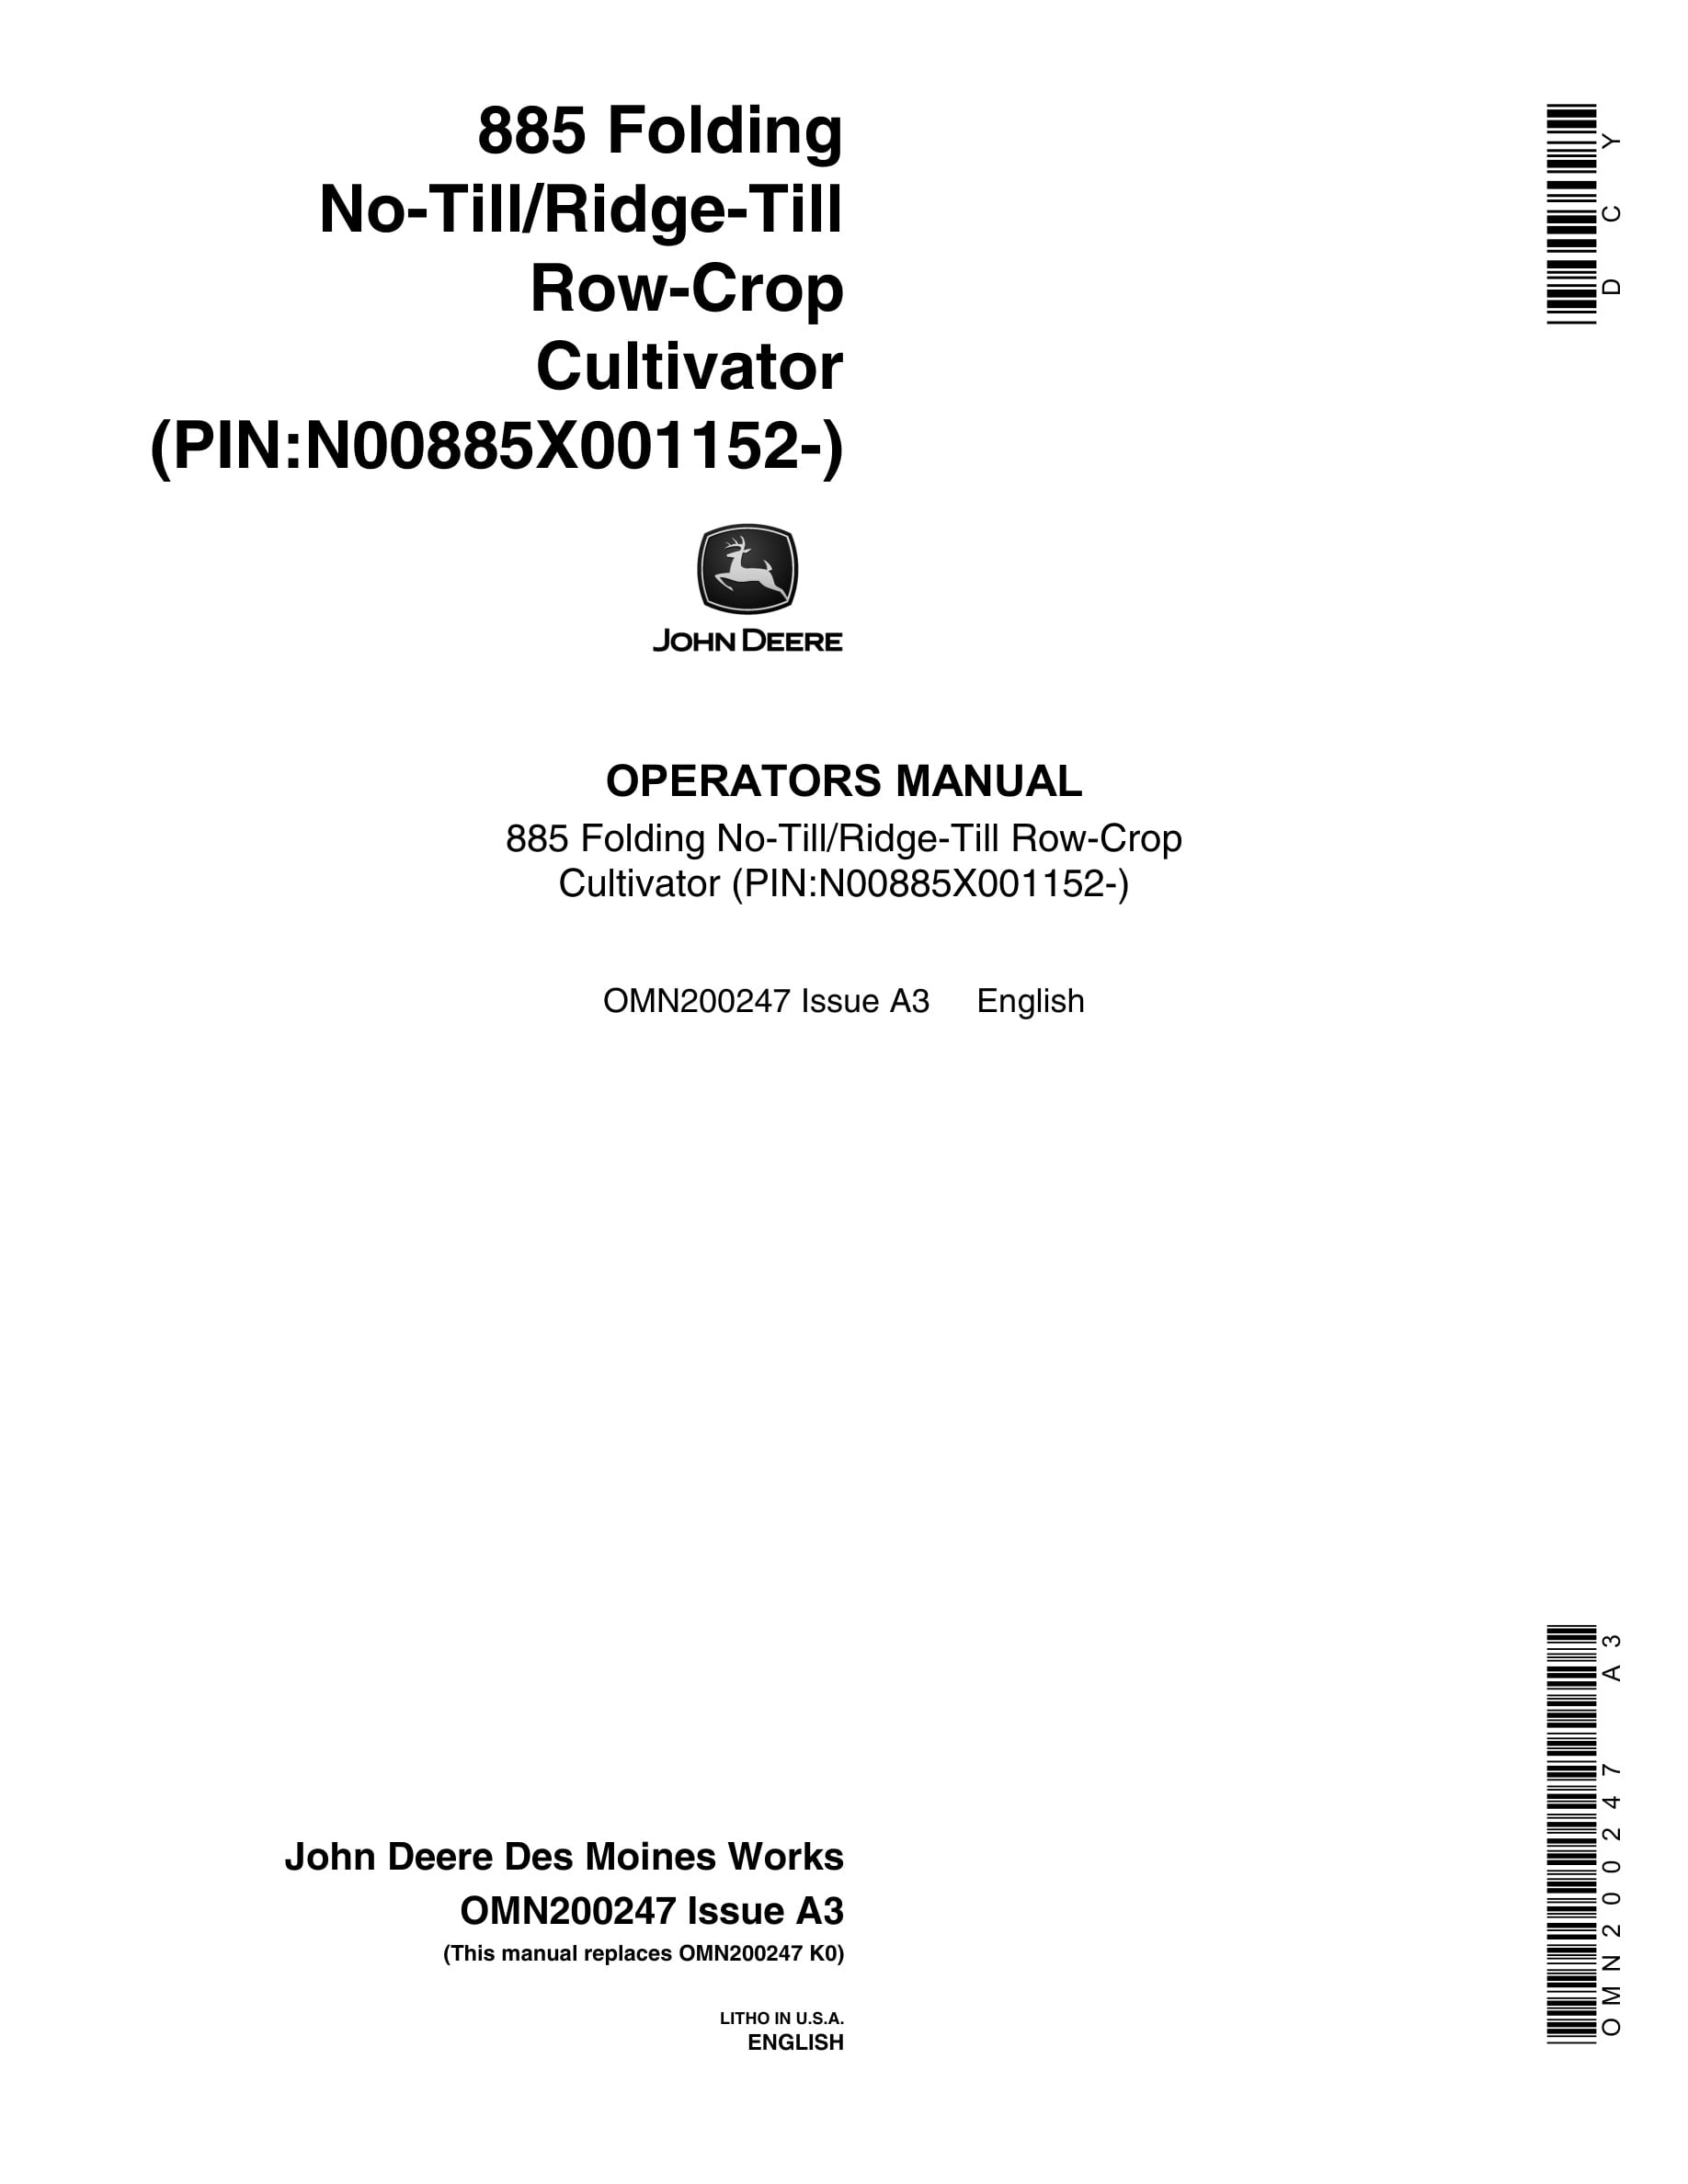 John Deere 885 Folding No-Till Ridge-Till Row-Crop CULTIVATOR Operator Manual OMN200247-1